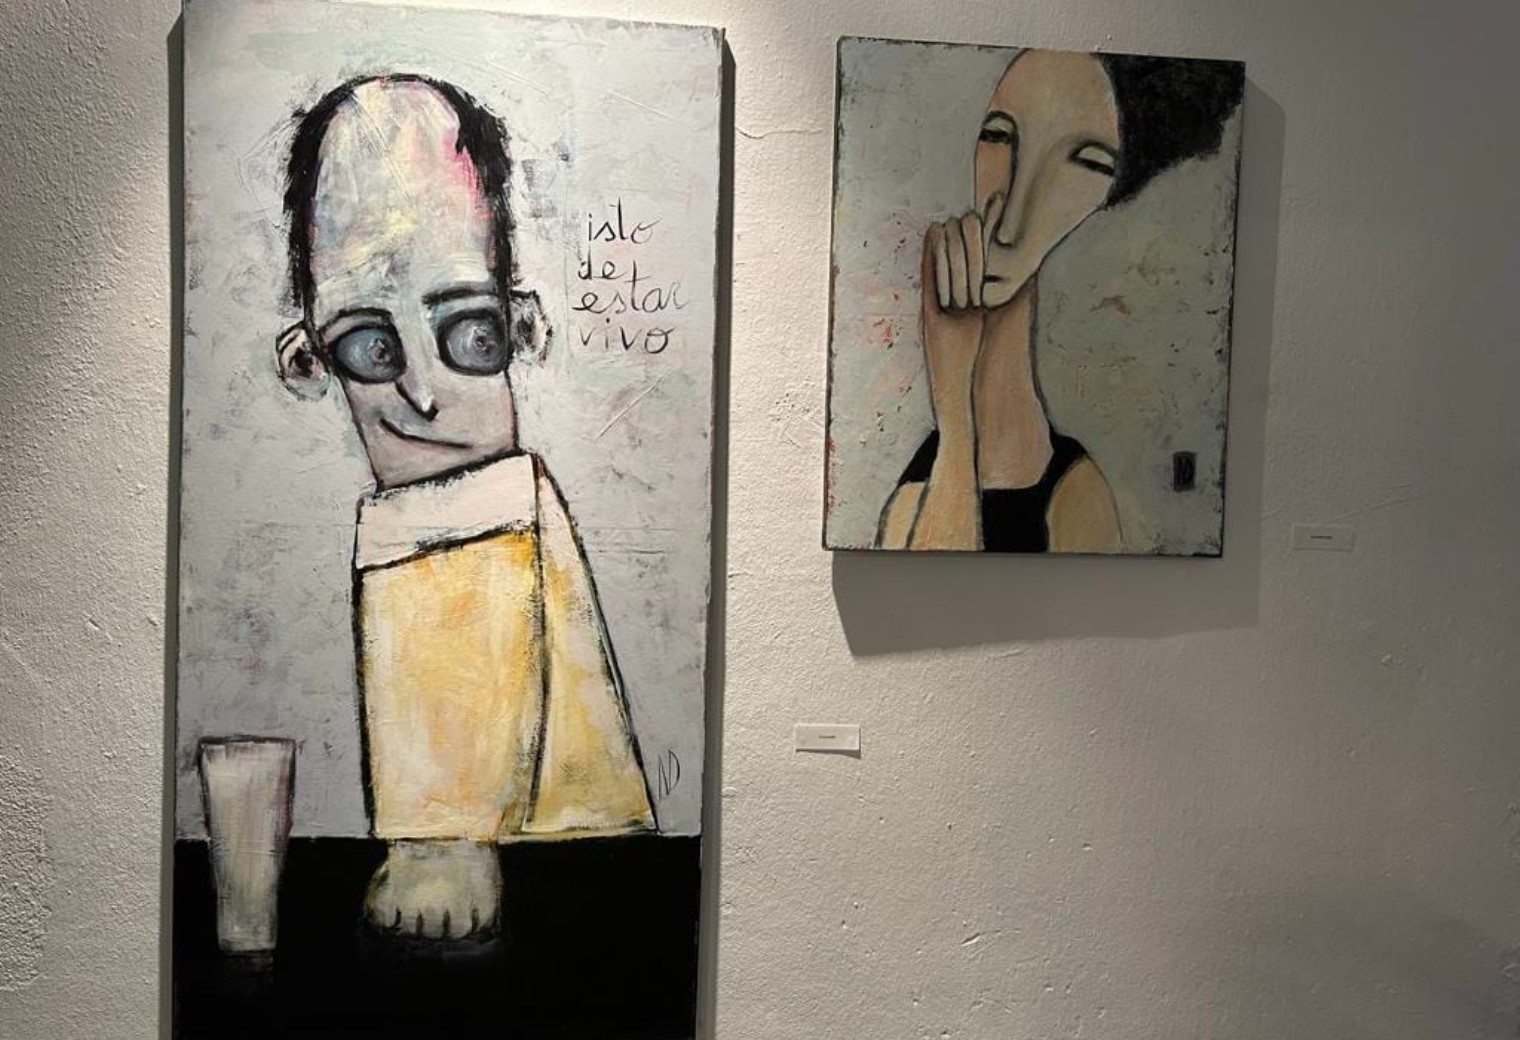 Exhibition "inconjuntos", by Nélia Duarte